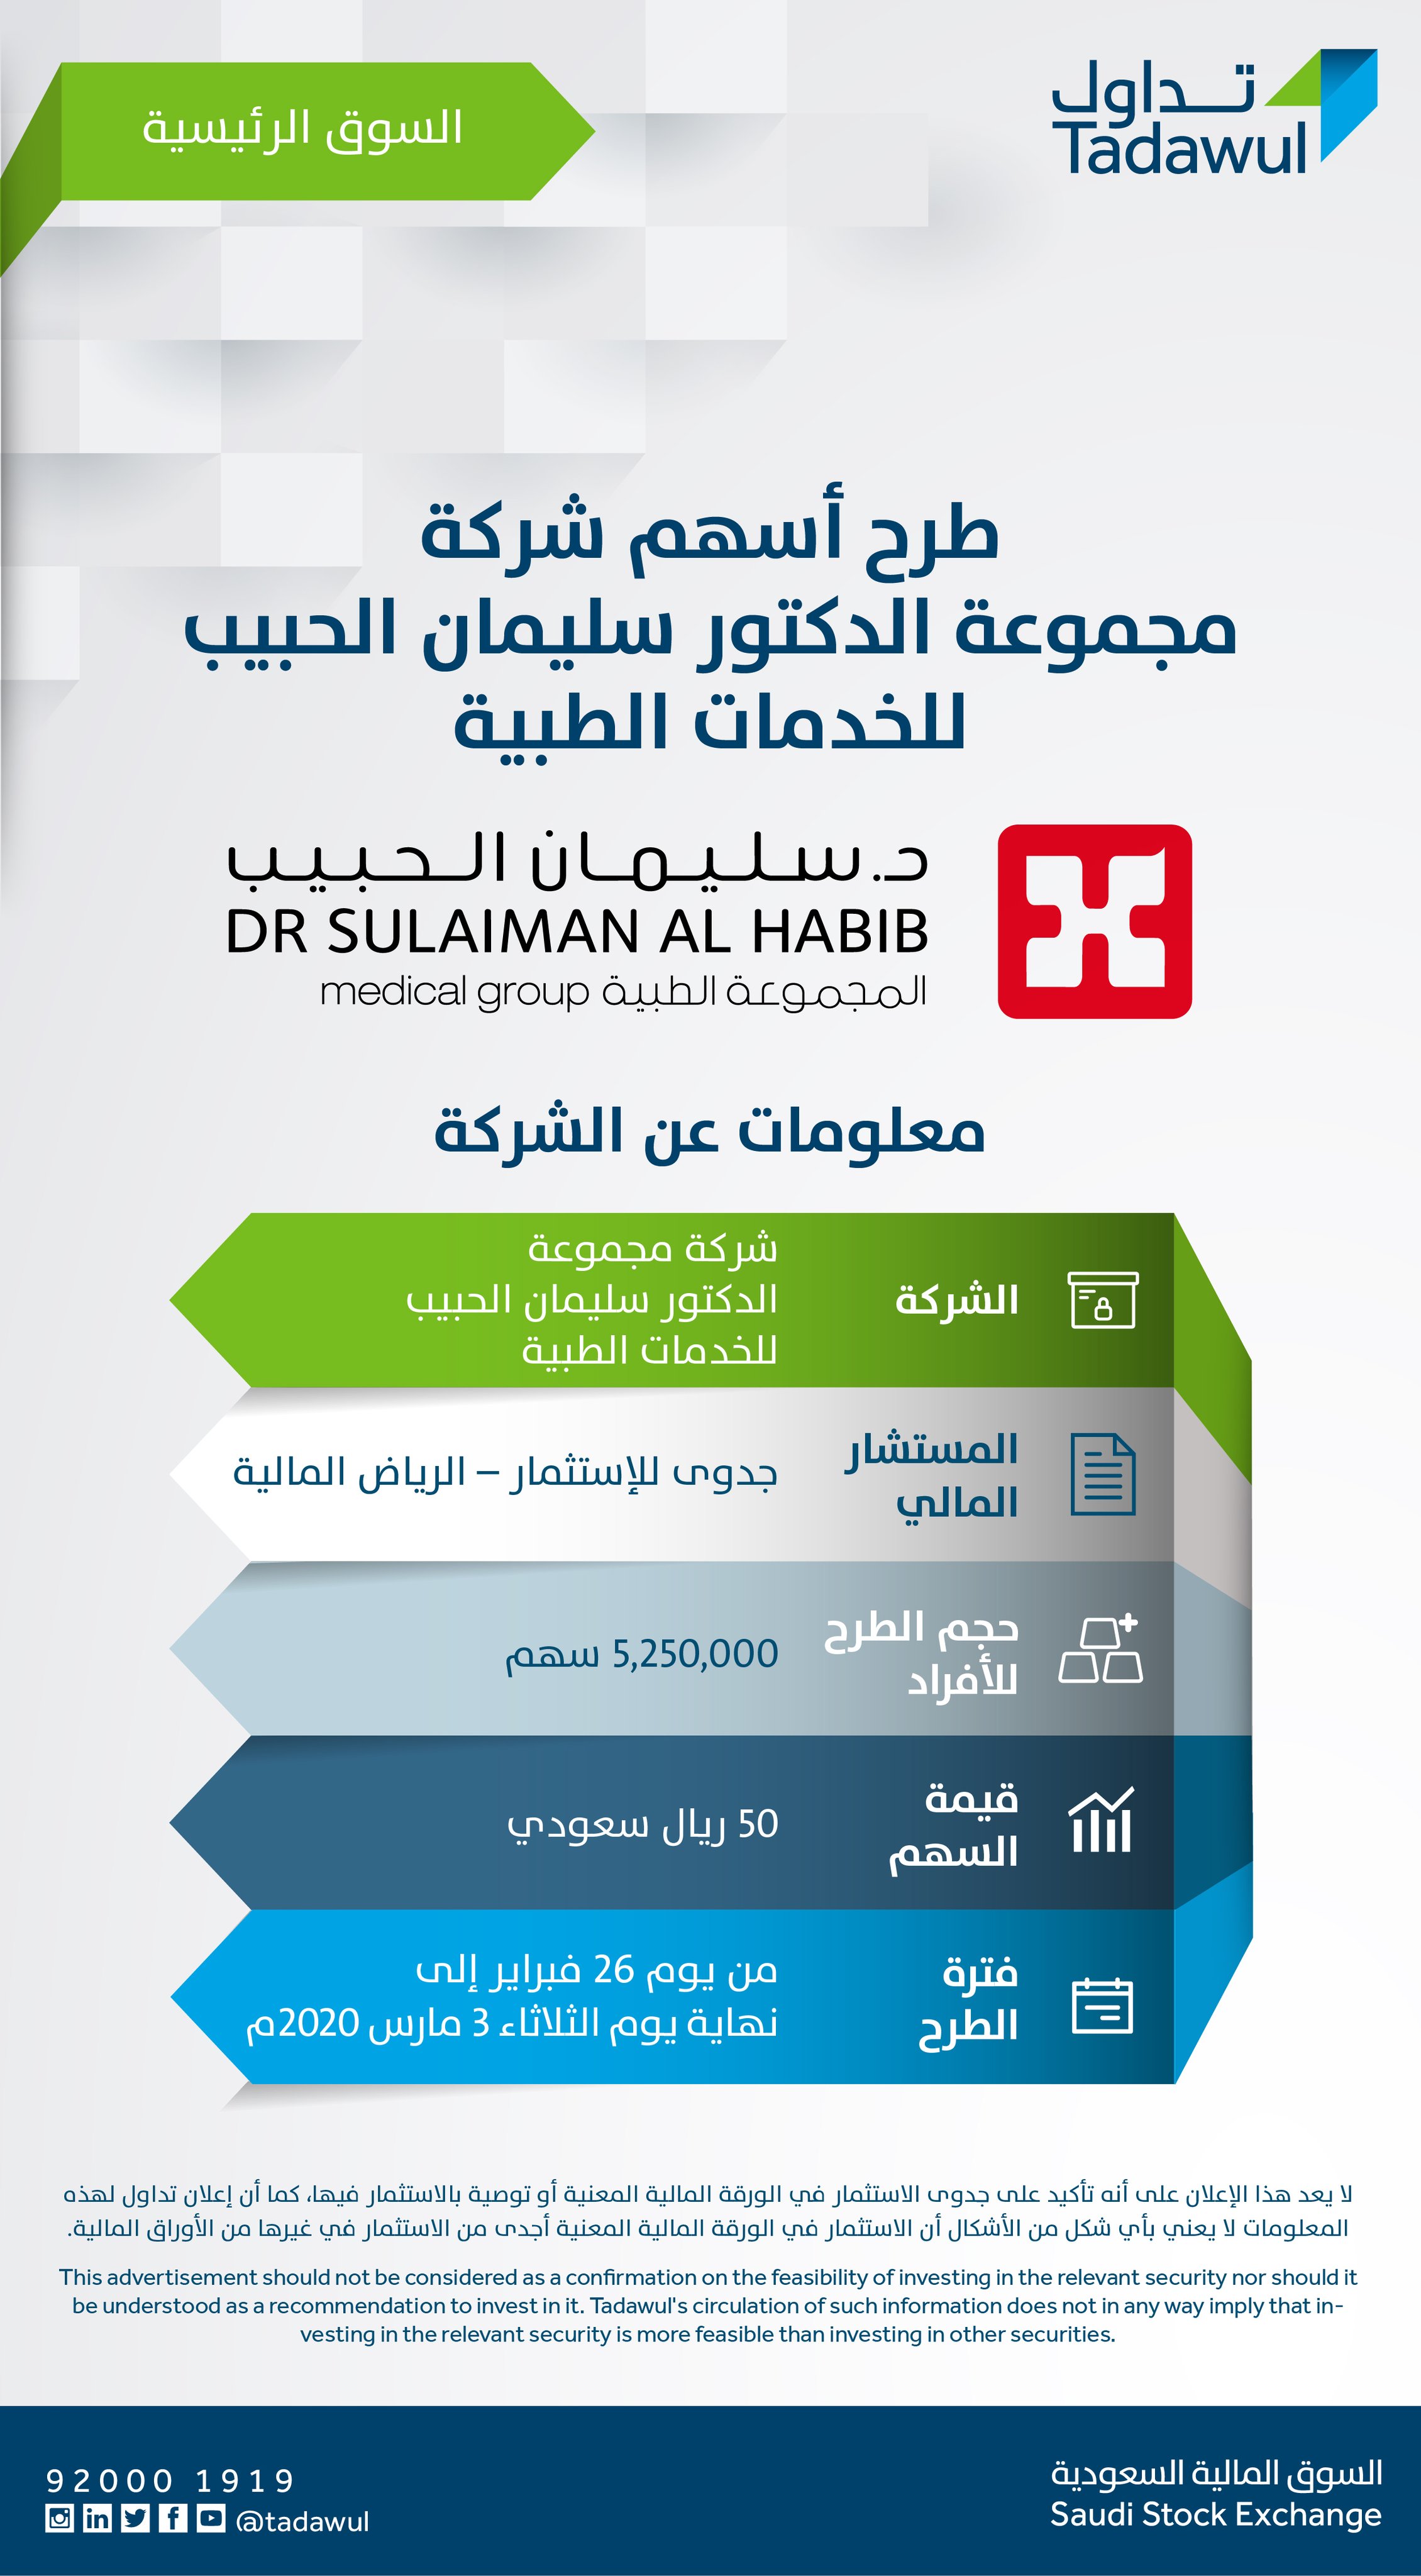 Saudi Exchange | تداول السعودية on Twitter: "يبدأ طرح أسهم شركة مجموعة  الدكتور سليمان الحبيب للخدمات الطبية يوم الأربعاء 26 فبراير 2020م في  #السوق_الرئيسية للاطلاع على نشرة الإصدار: https://t.co/wIpeer4Tmm  https://t.co/fQ4pZkOZOb" / Twitter